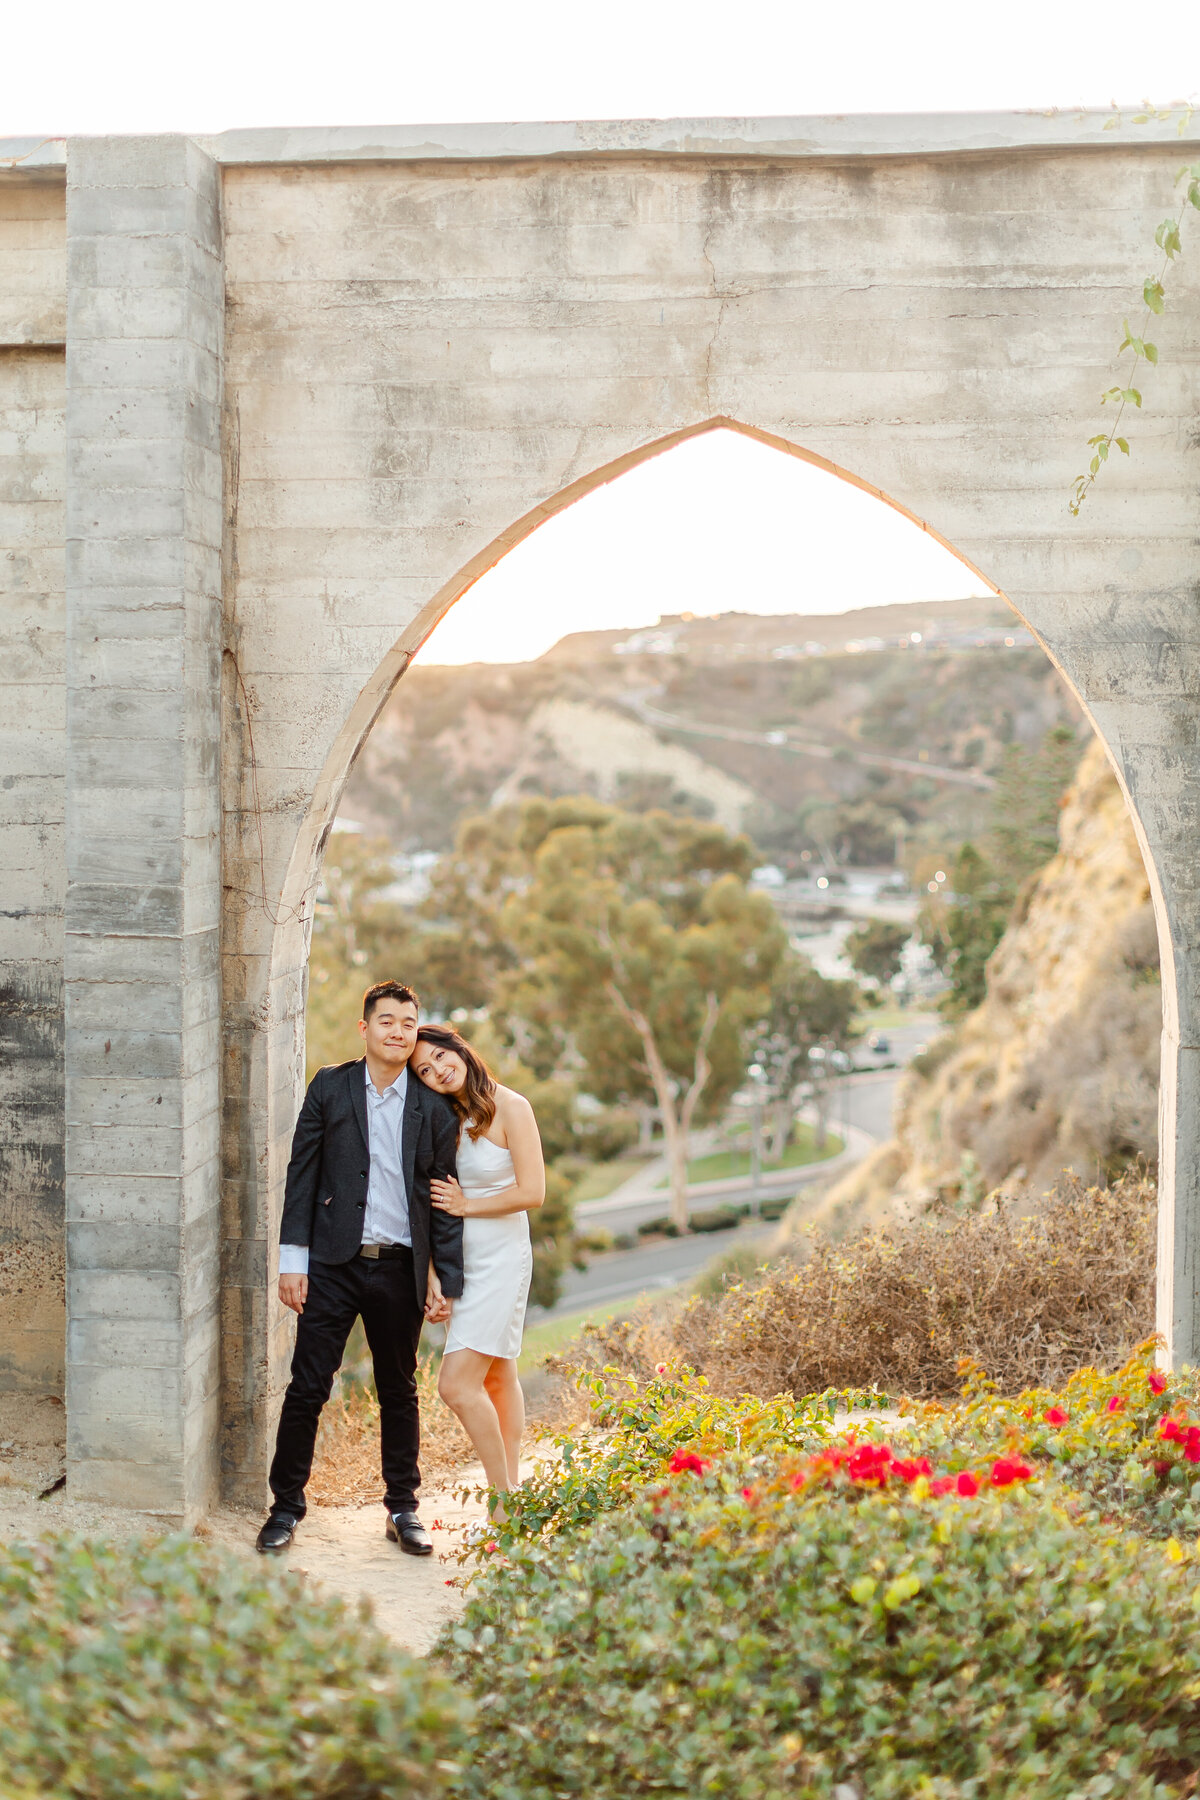 Professional Couples photographer in Orange County, CA (16)